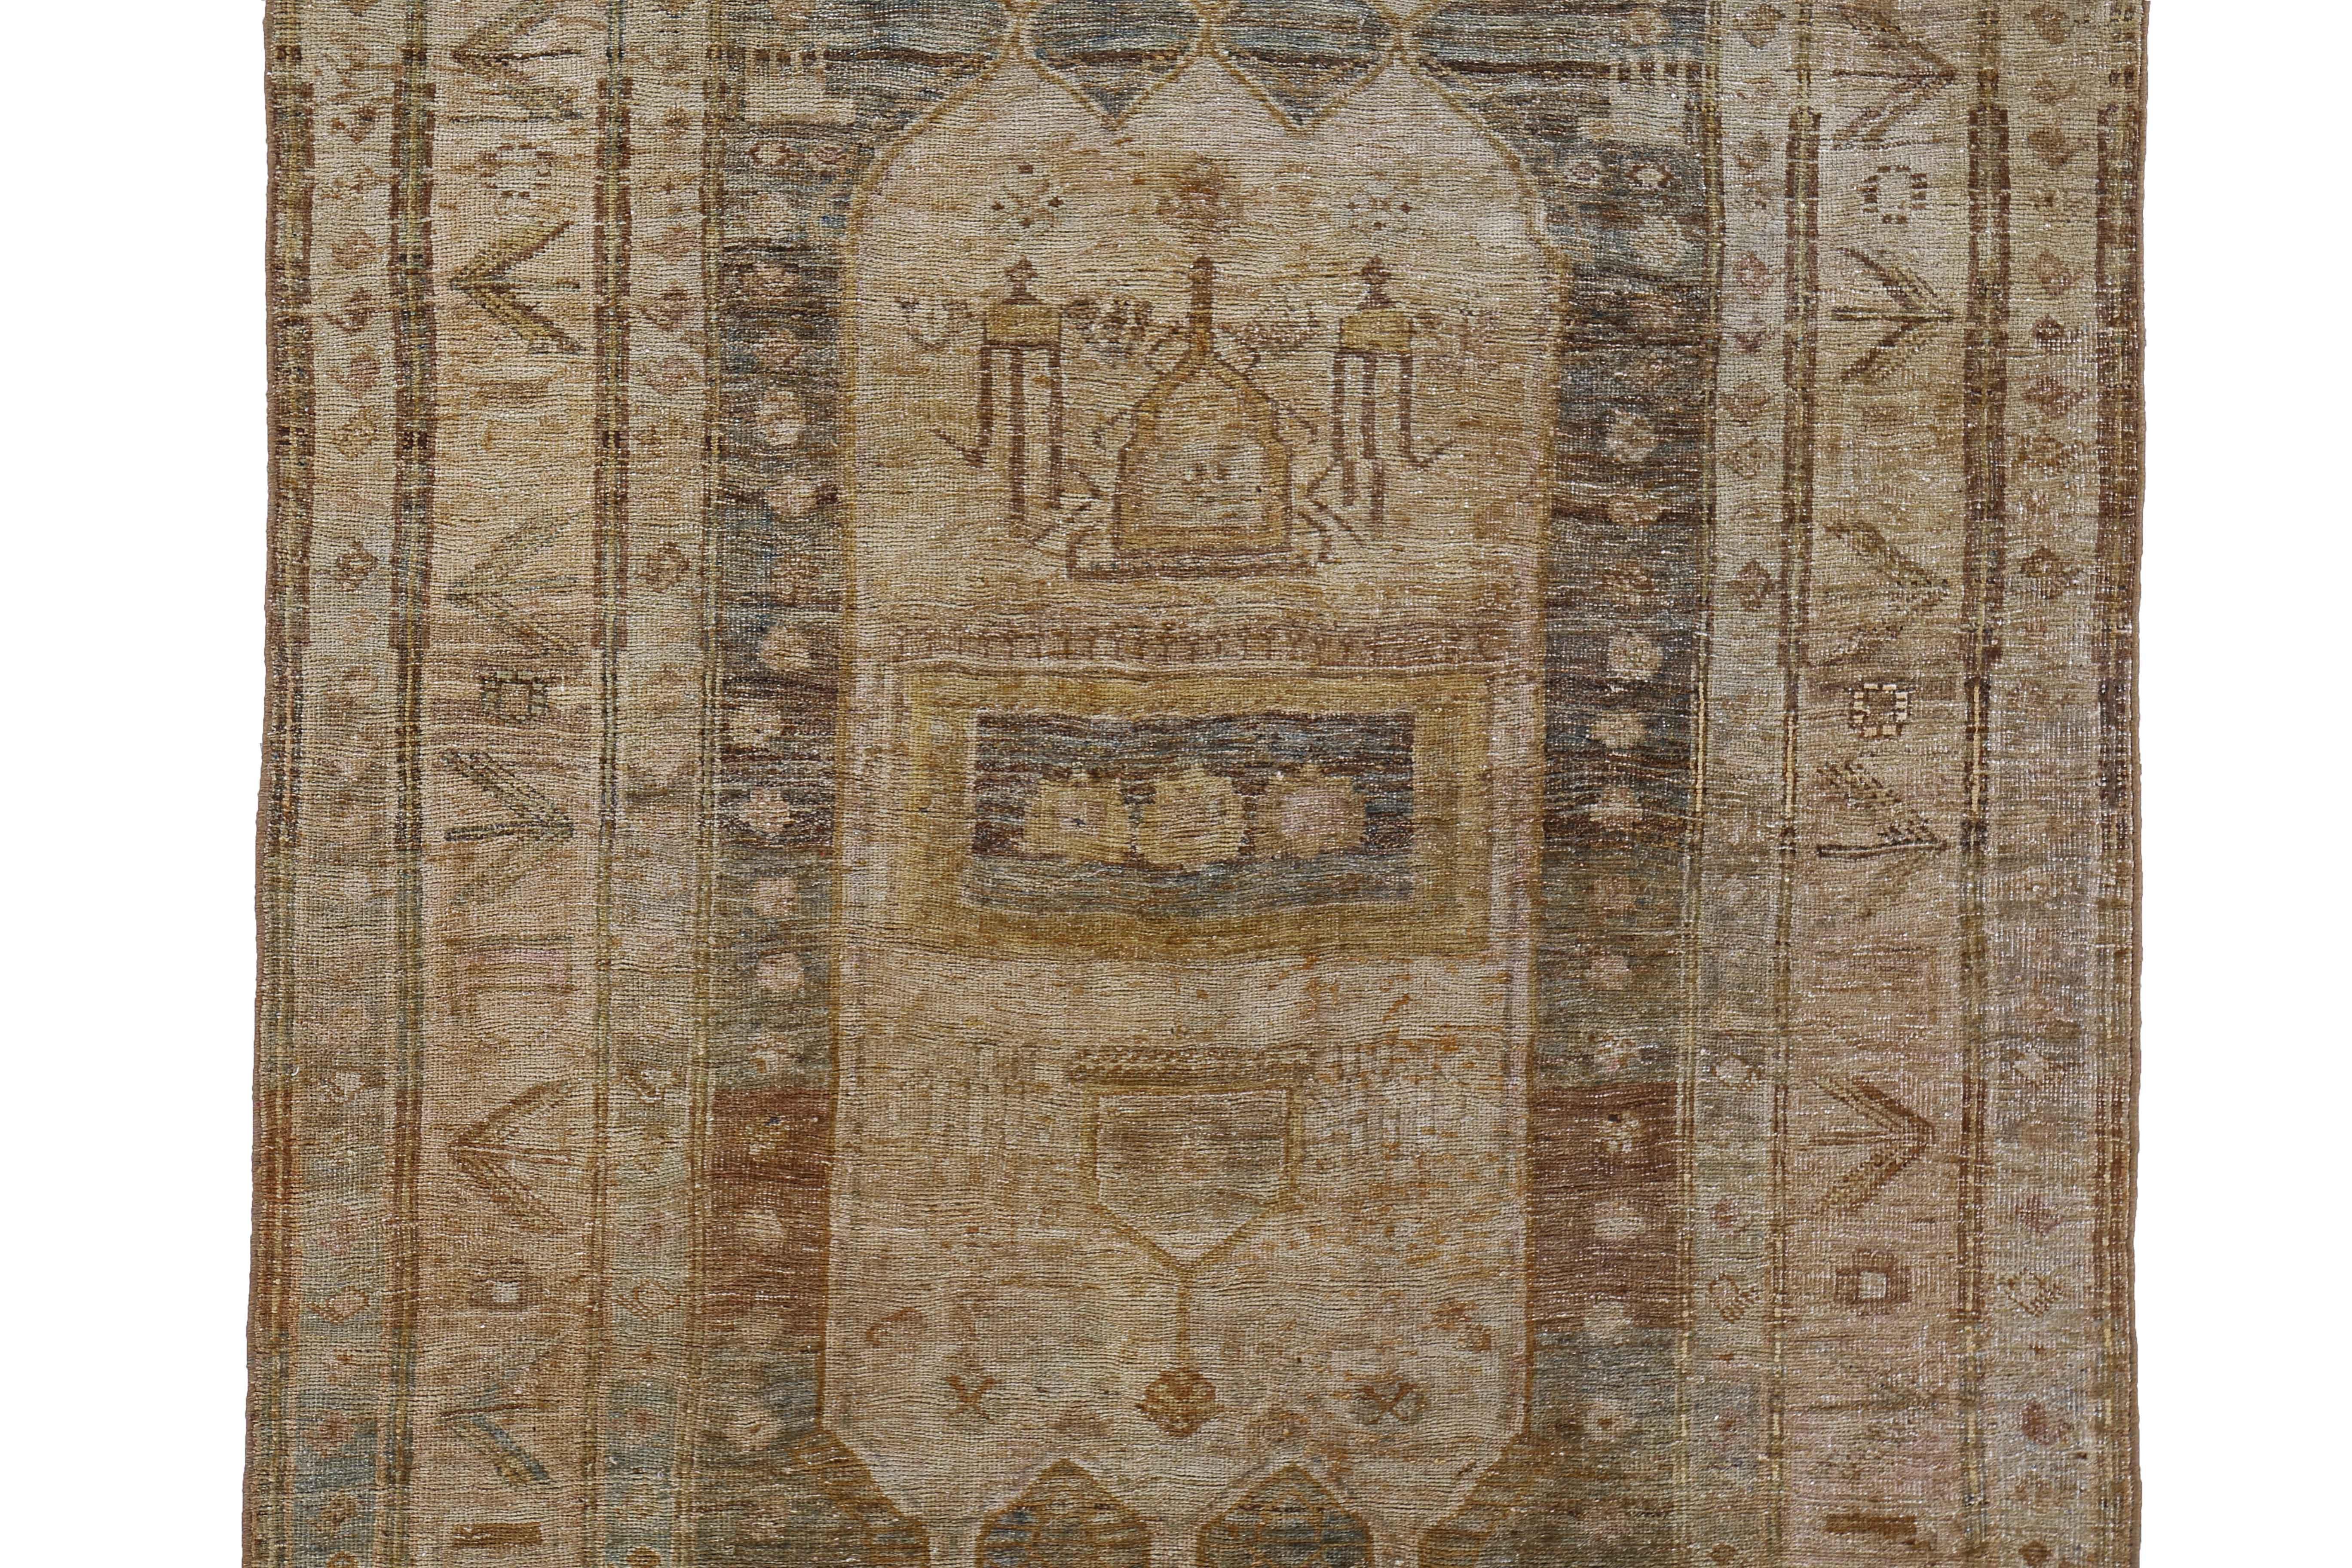 Other Antique Persian Area Rug Bijar Design